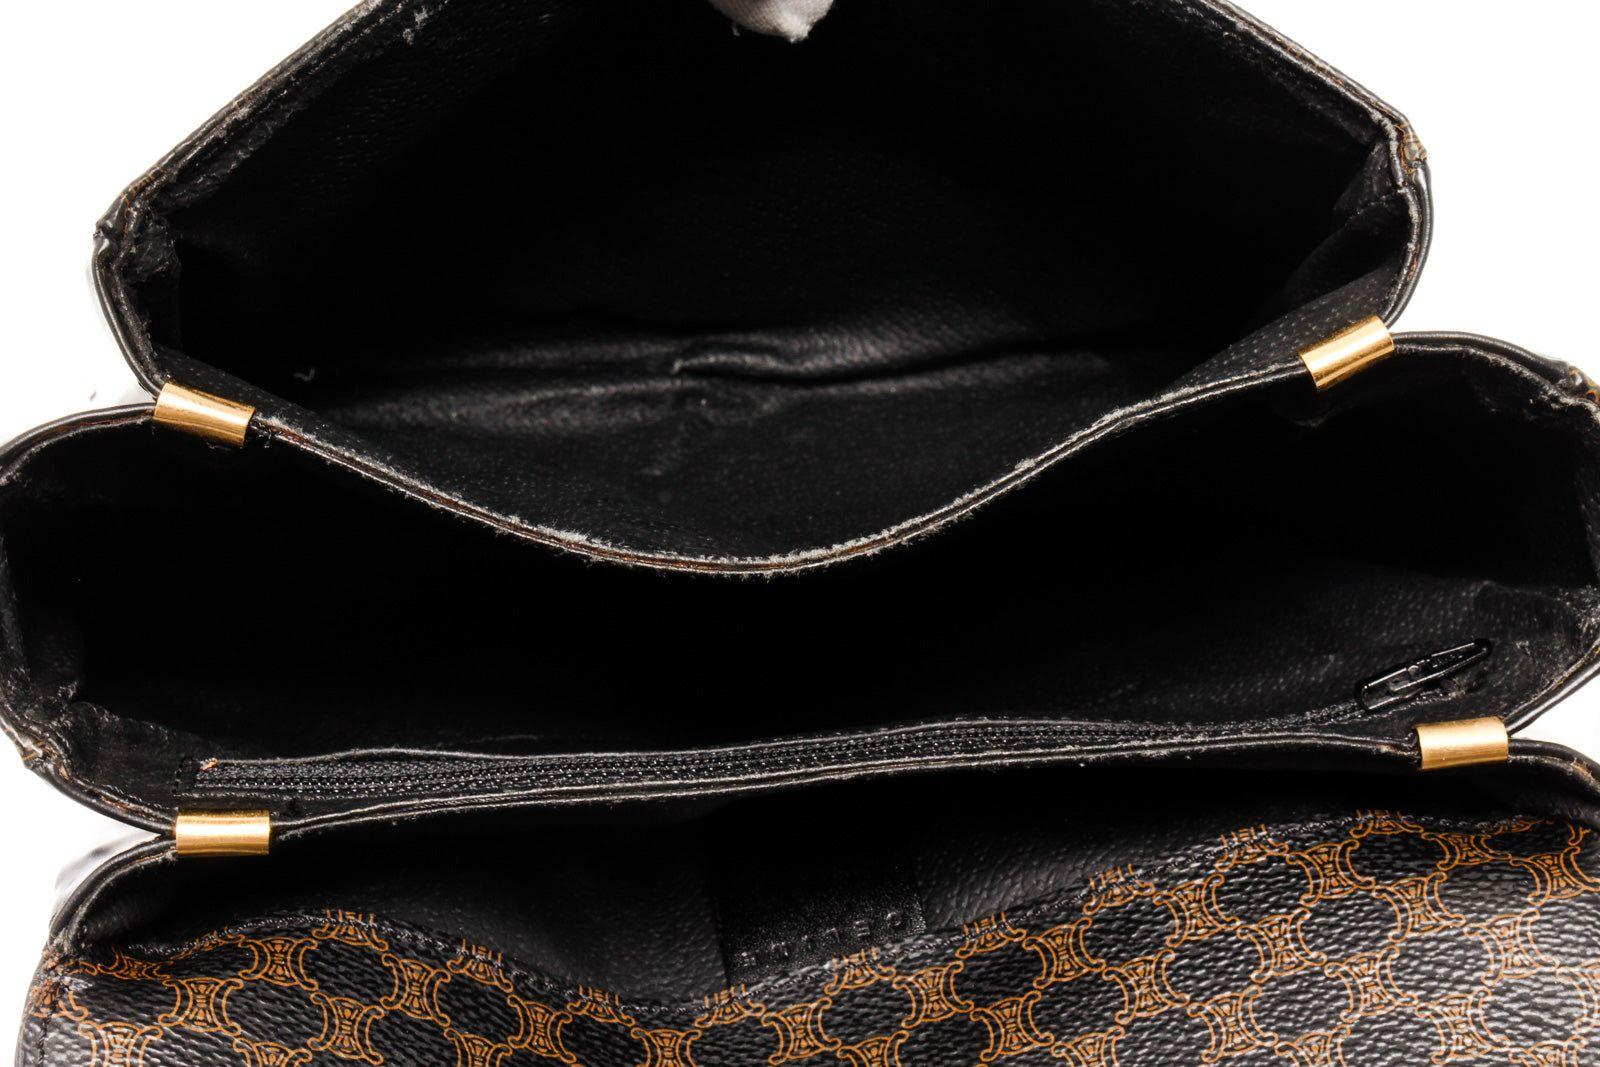 Women's Black leather Macadam pattern Celine shoulder bag with gold-tone hardware